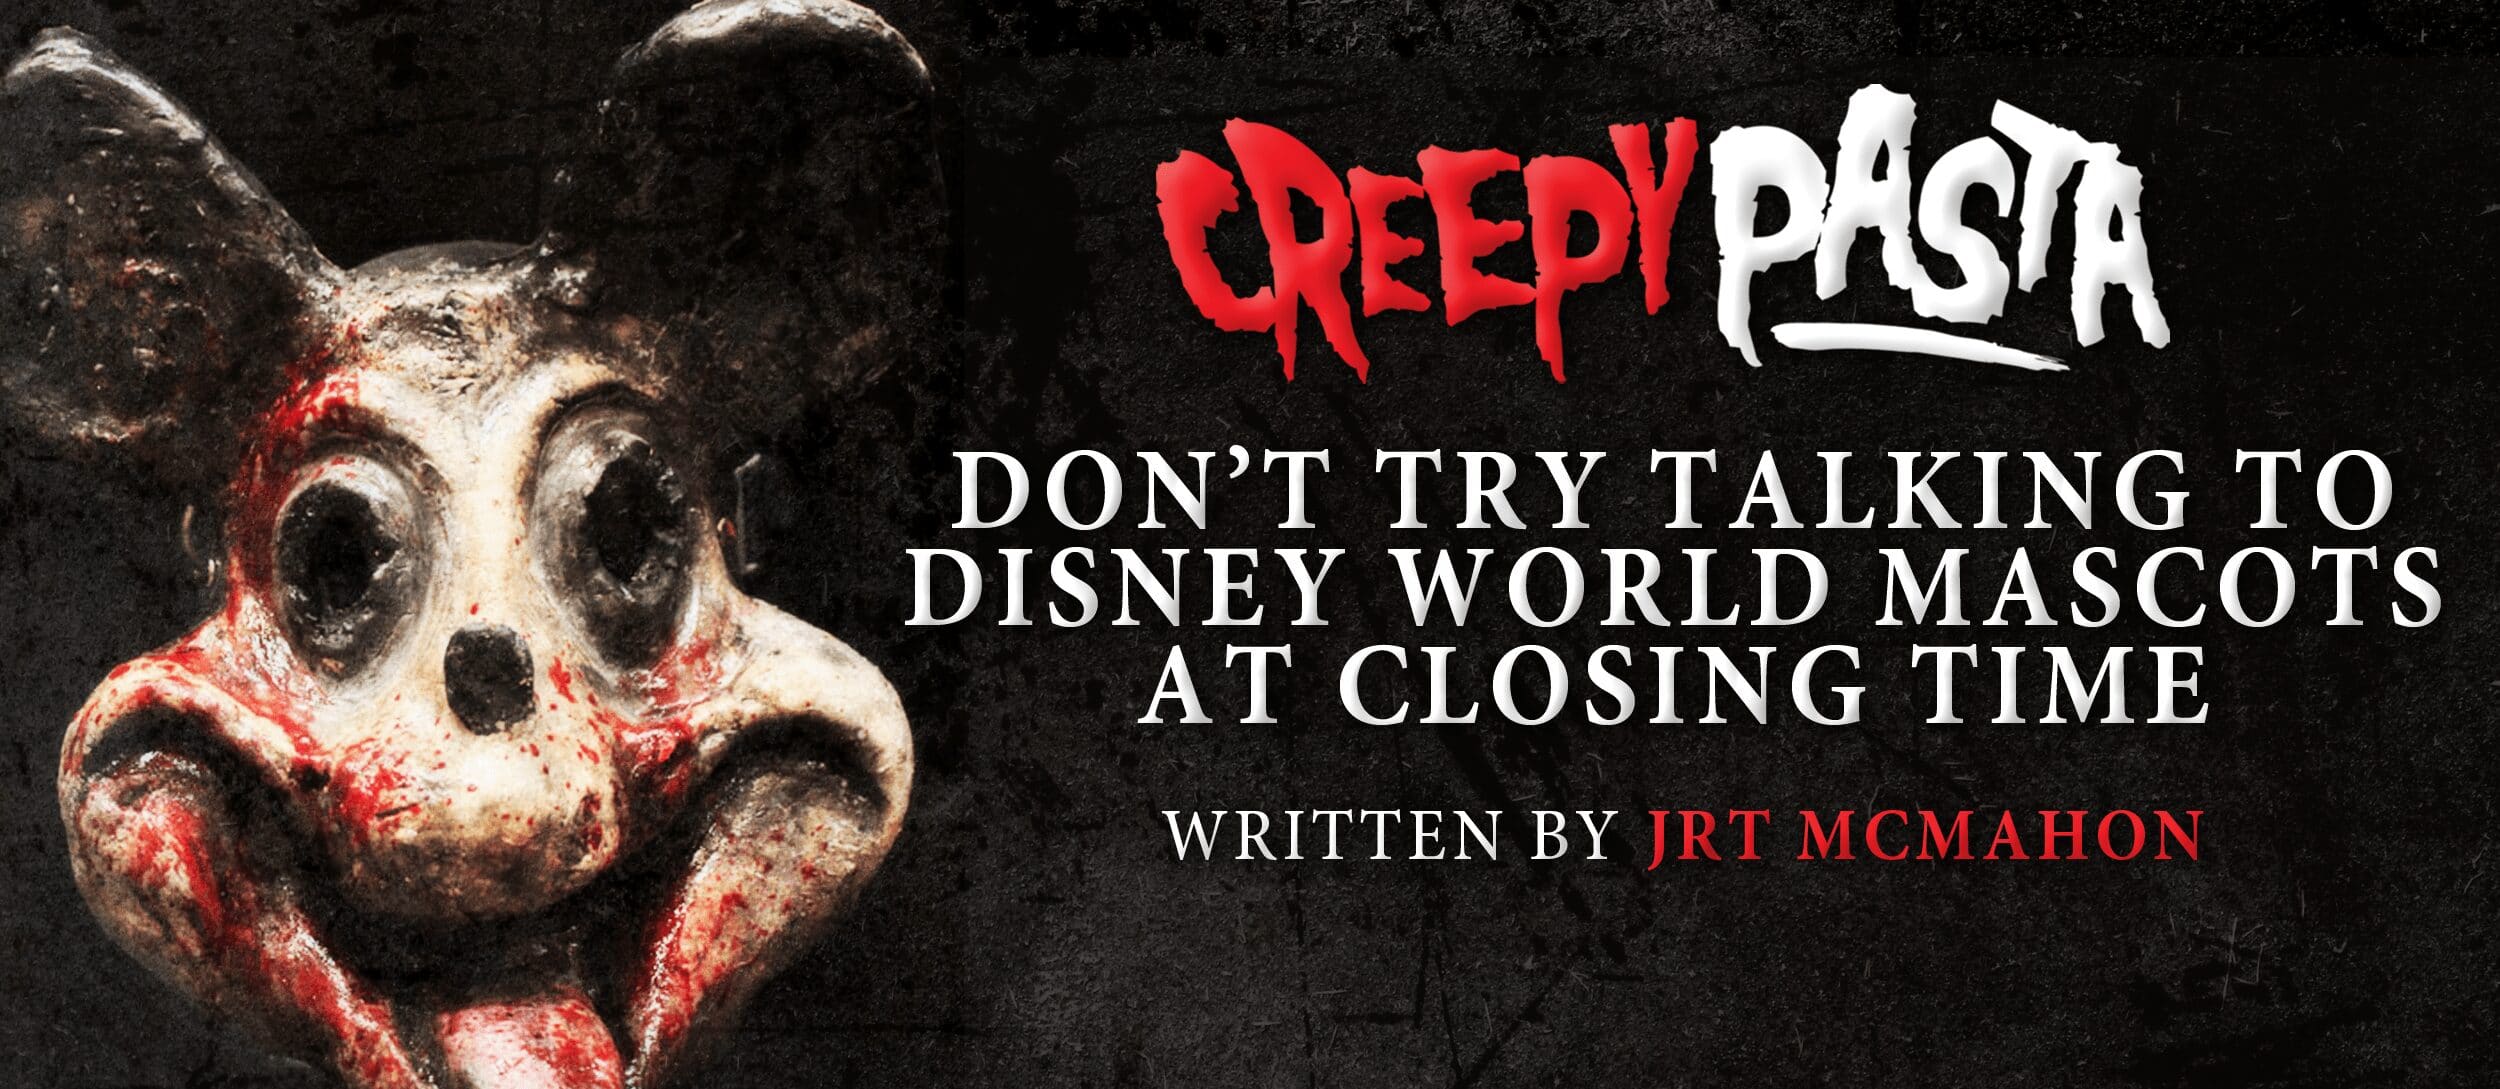 Disney Archives - Creepypasta